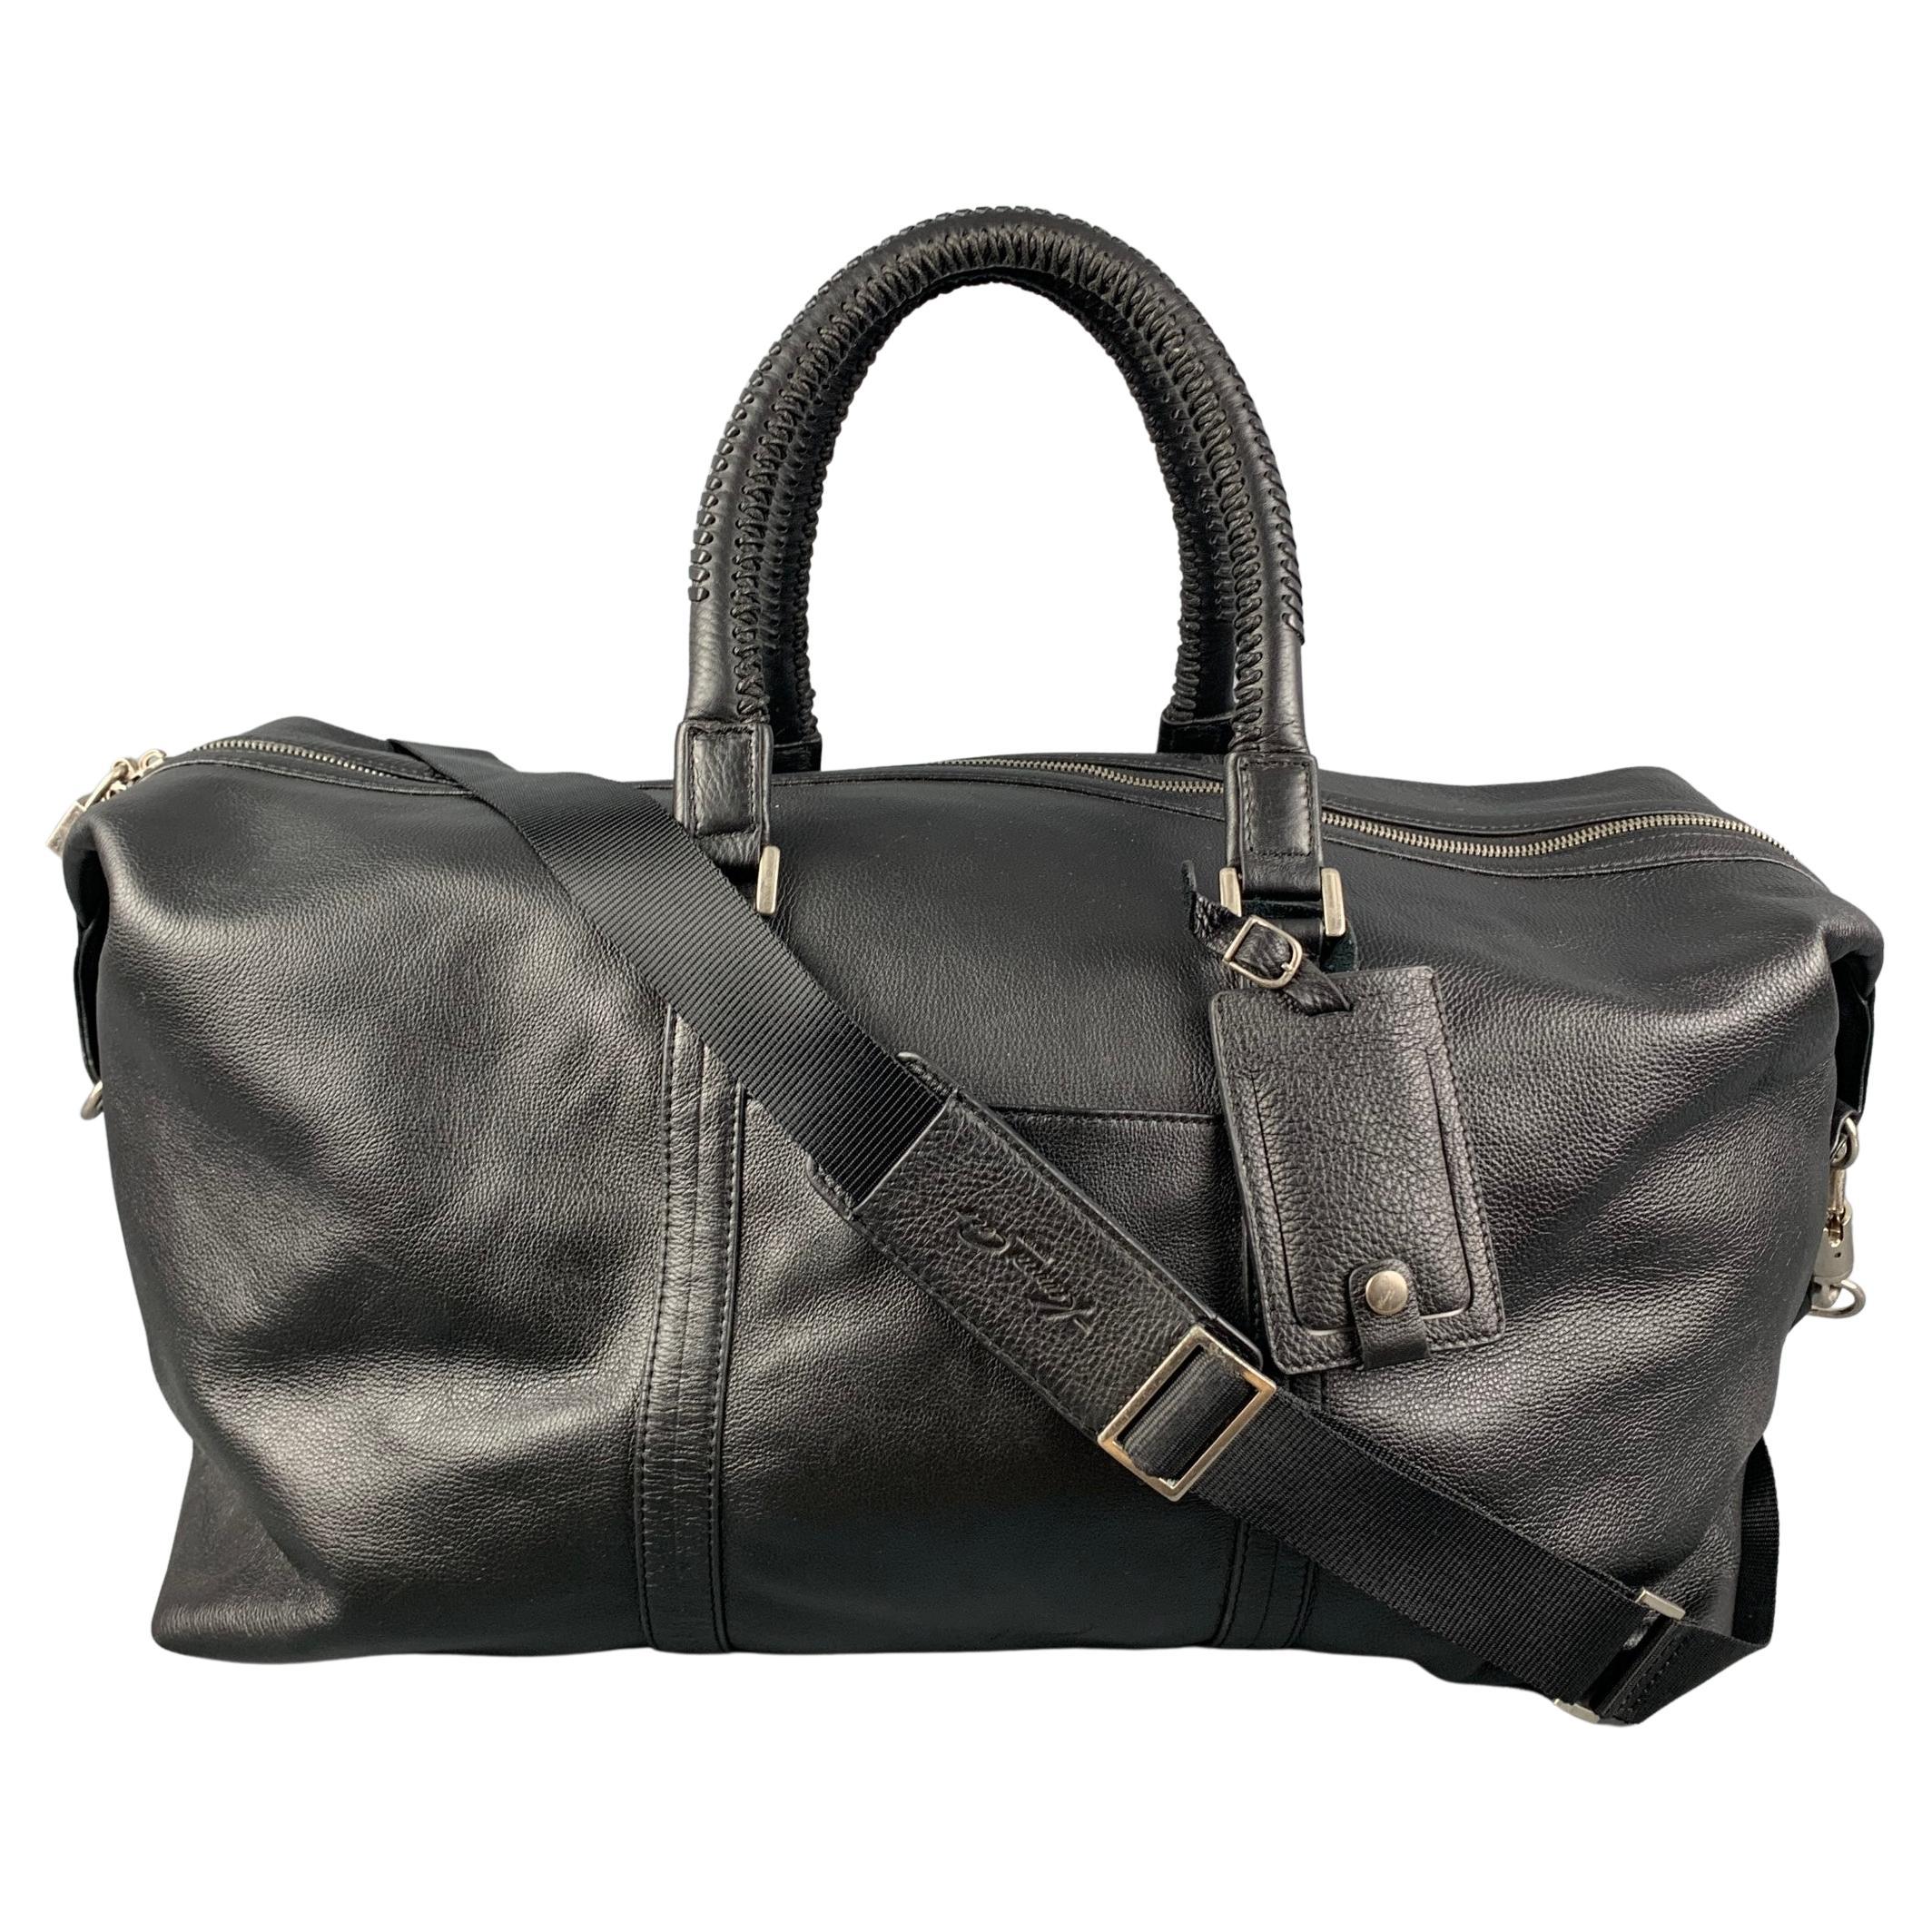 KENNETH COLE Black Leather Duffle Bag